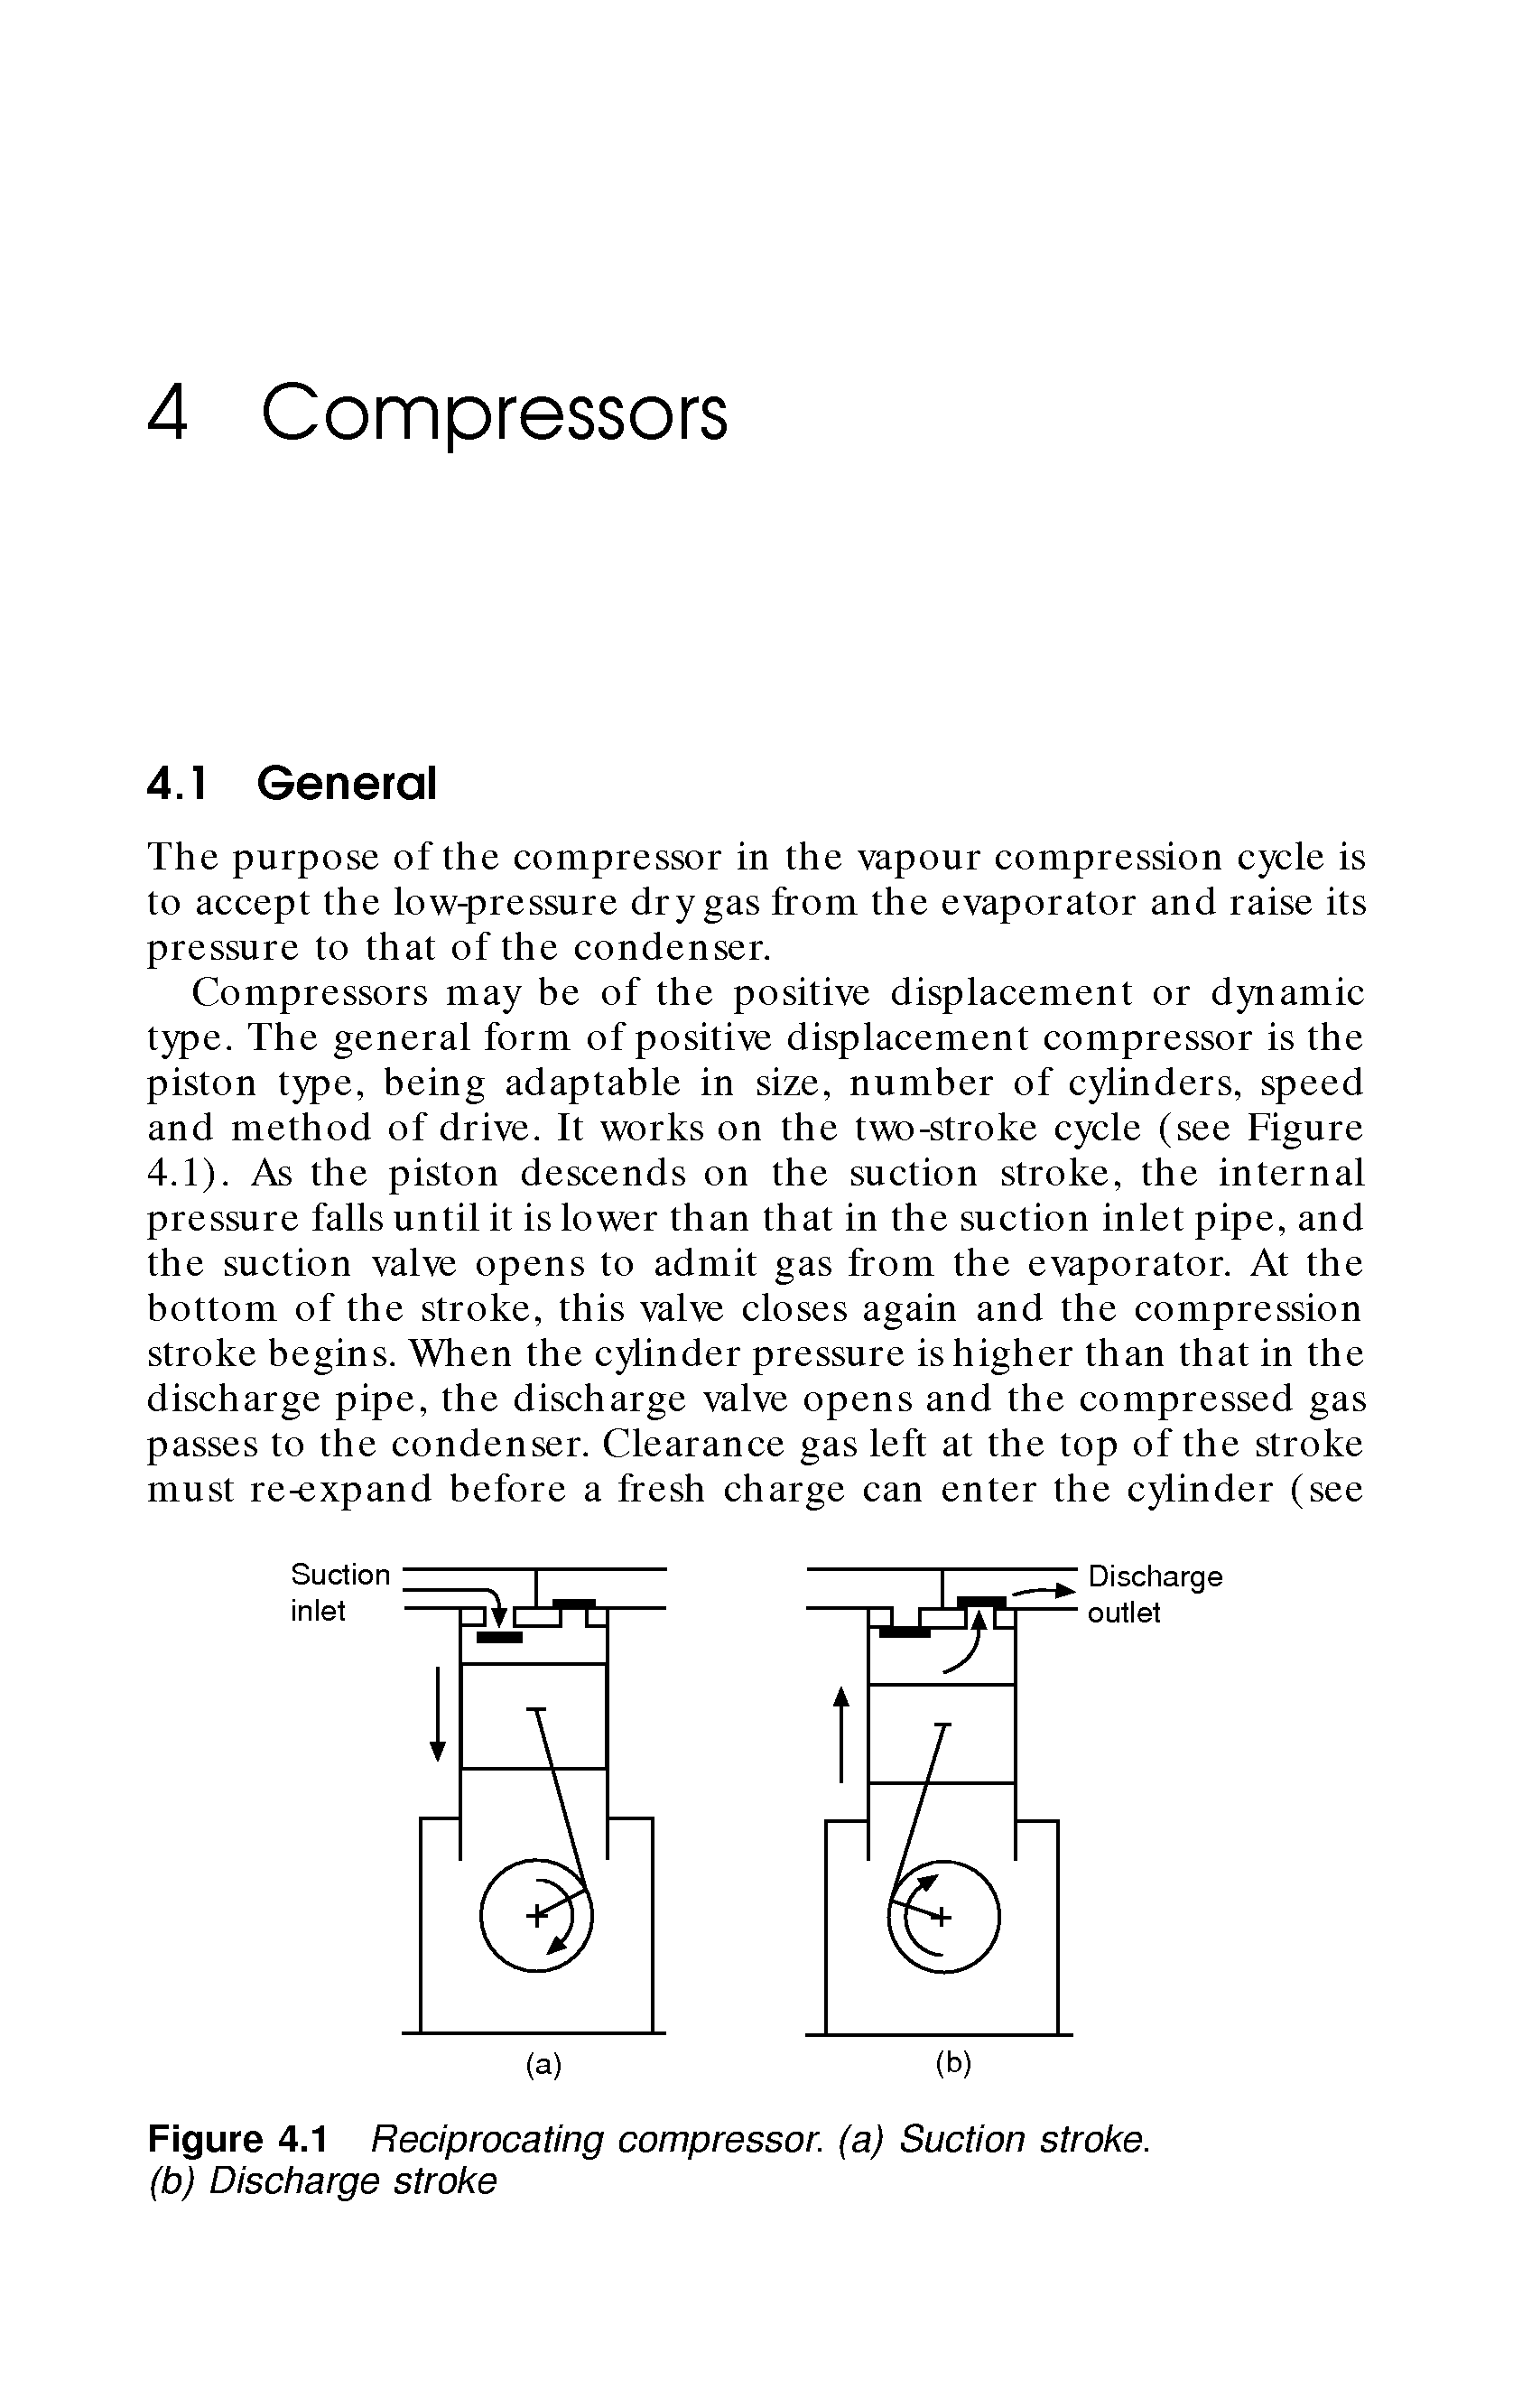 Figure 4.1 Reciprocating compressor, (a) Suction stroke, (b) Discharge stroke...